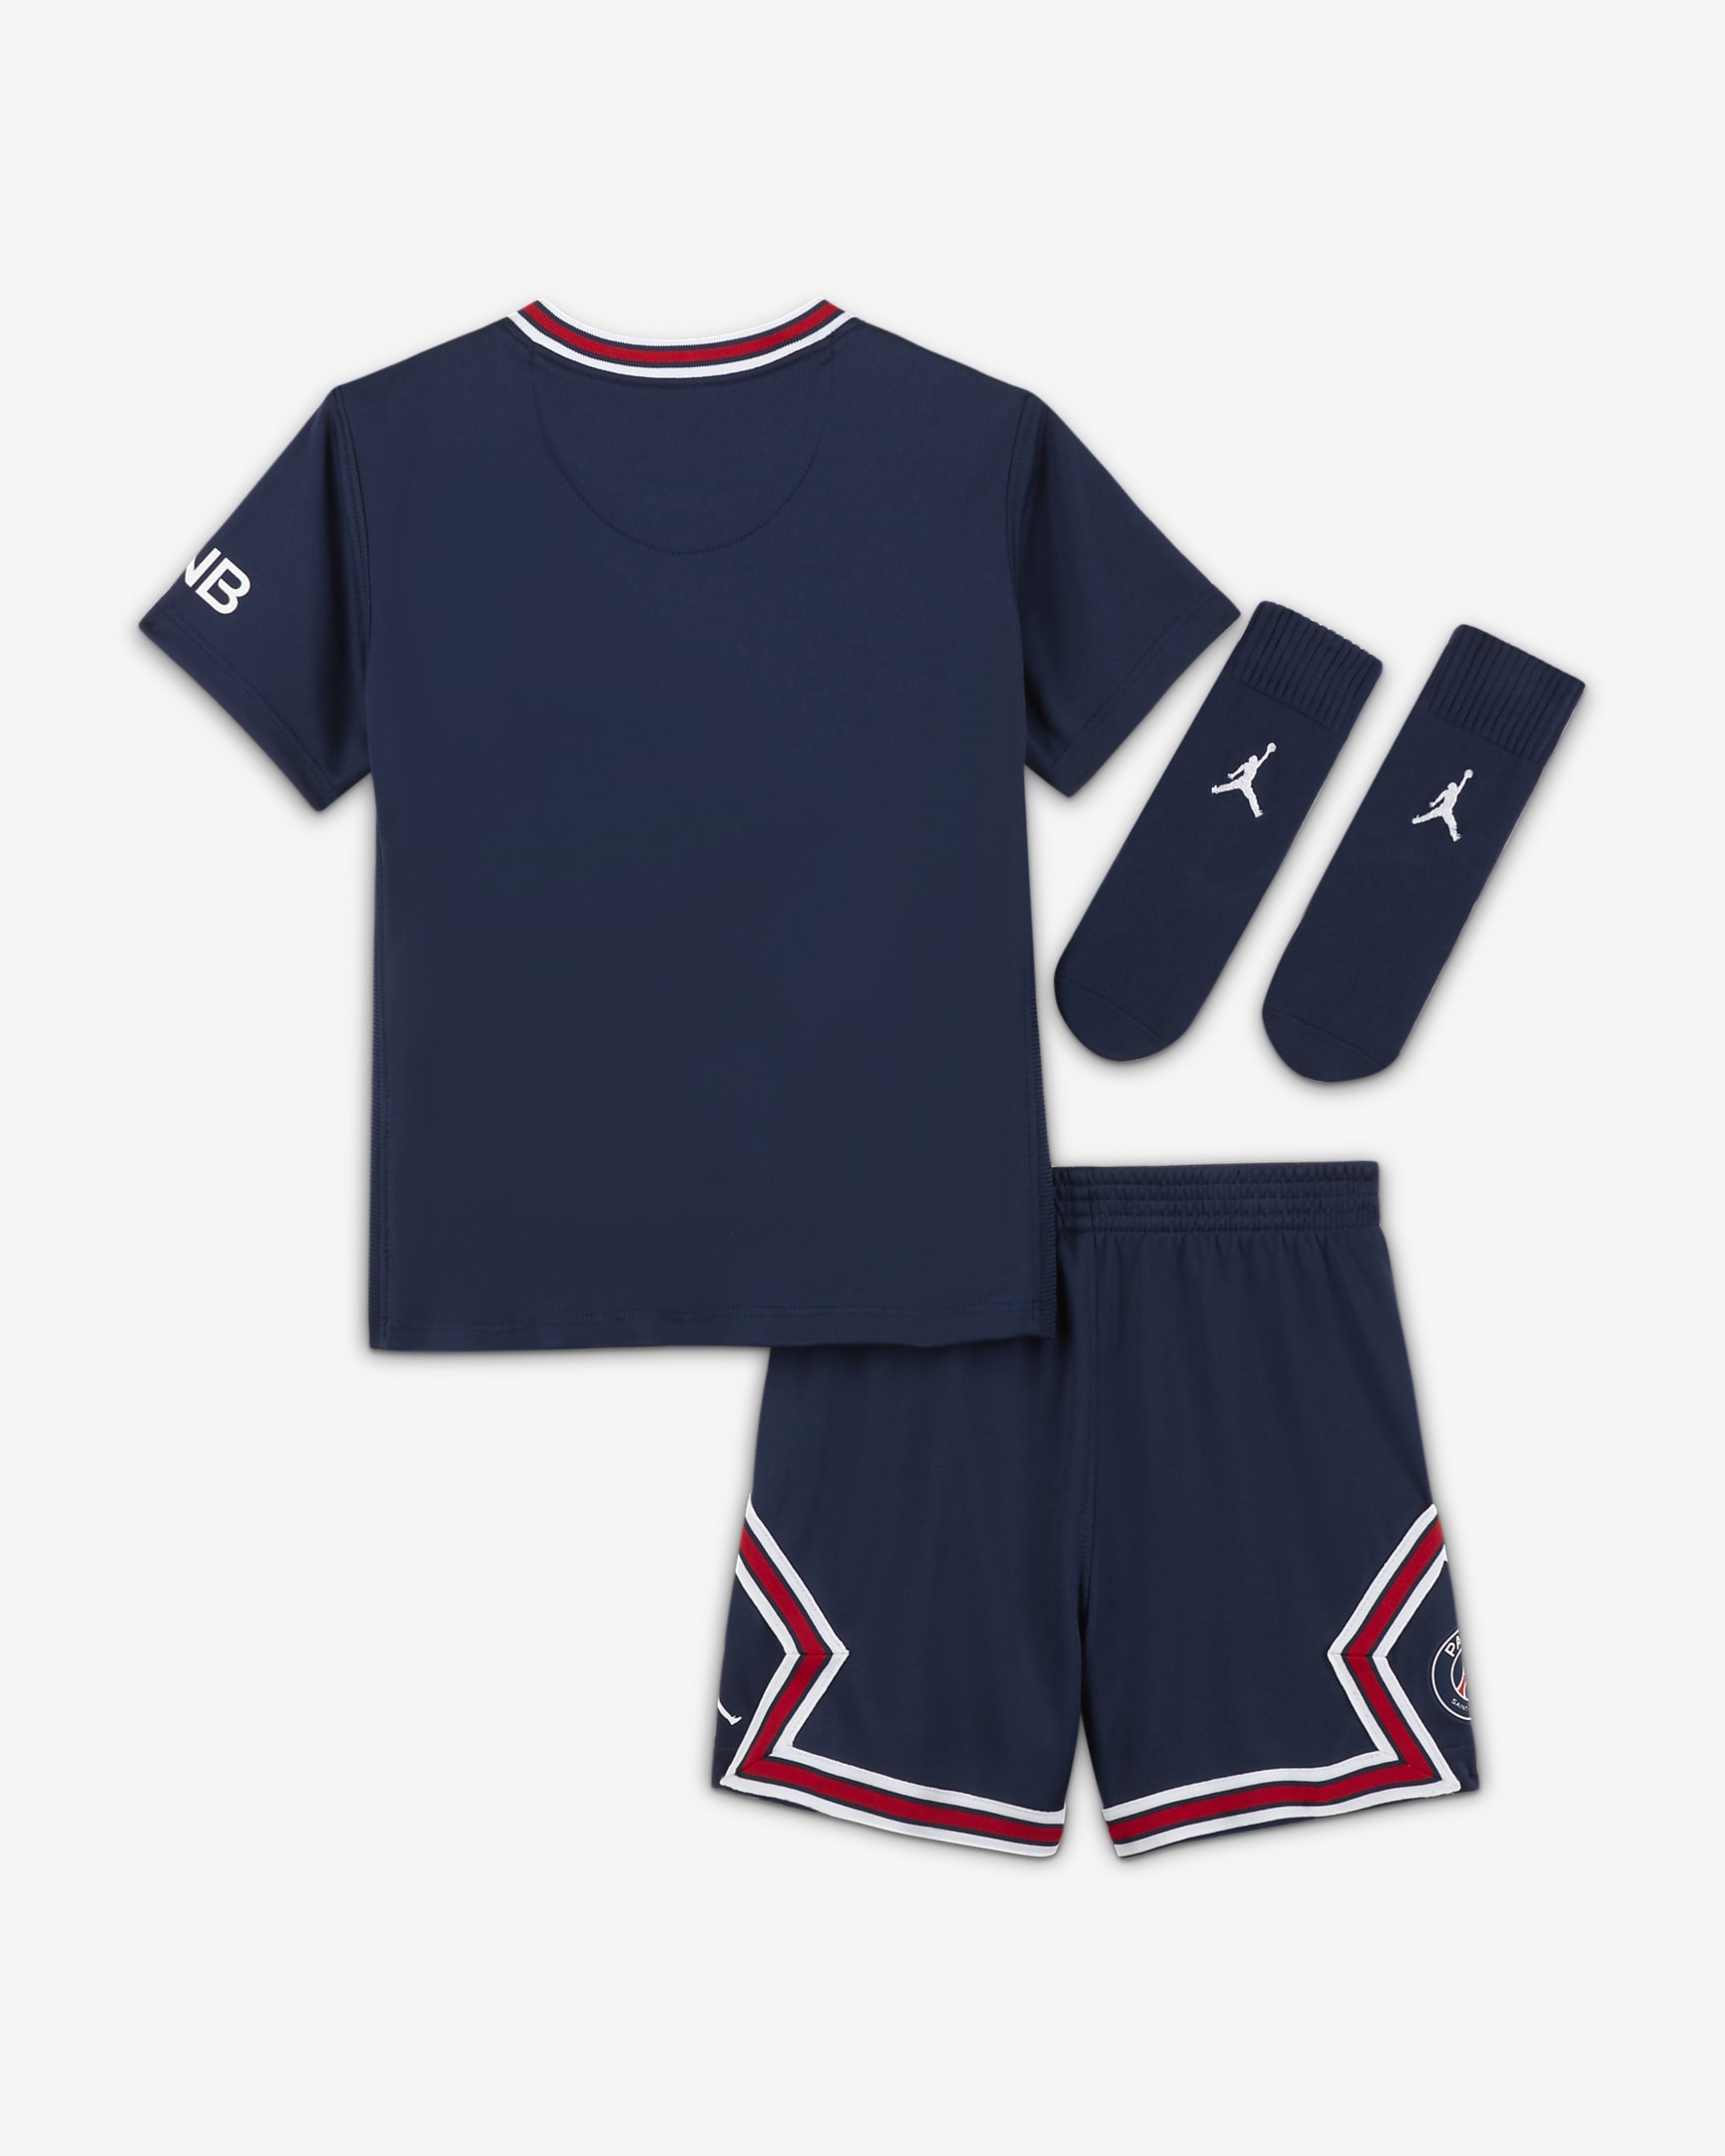 Paris Saint-Germain 2021/22 Home Baby & Toddler Football Kit. Nike HR